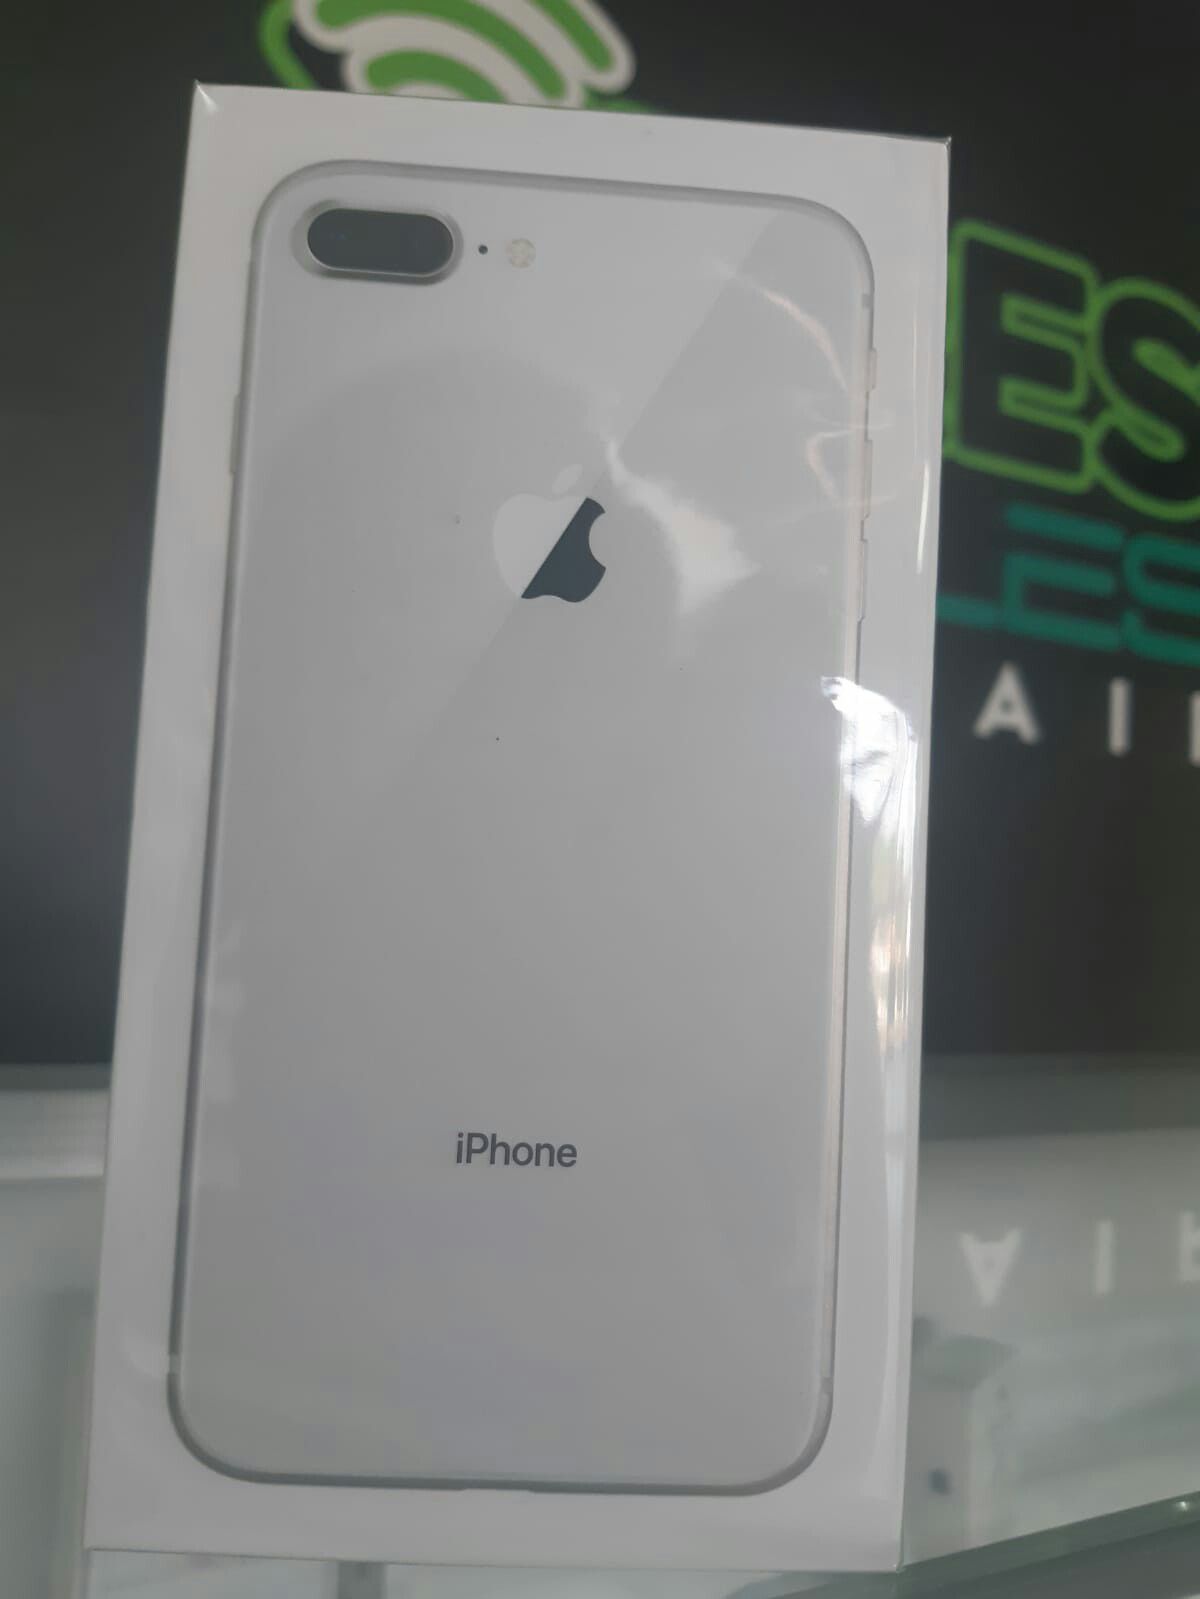 iPhone 8 Plus 256 GB - Factory Unlocked - Sealed - Like Condition - SOMOS TIENDA